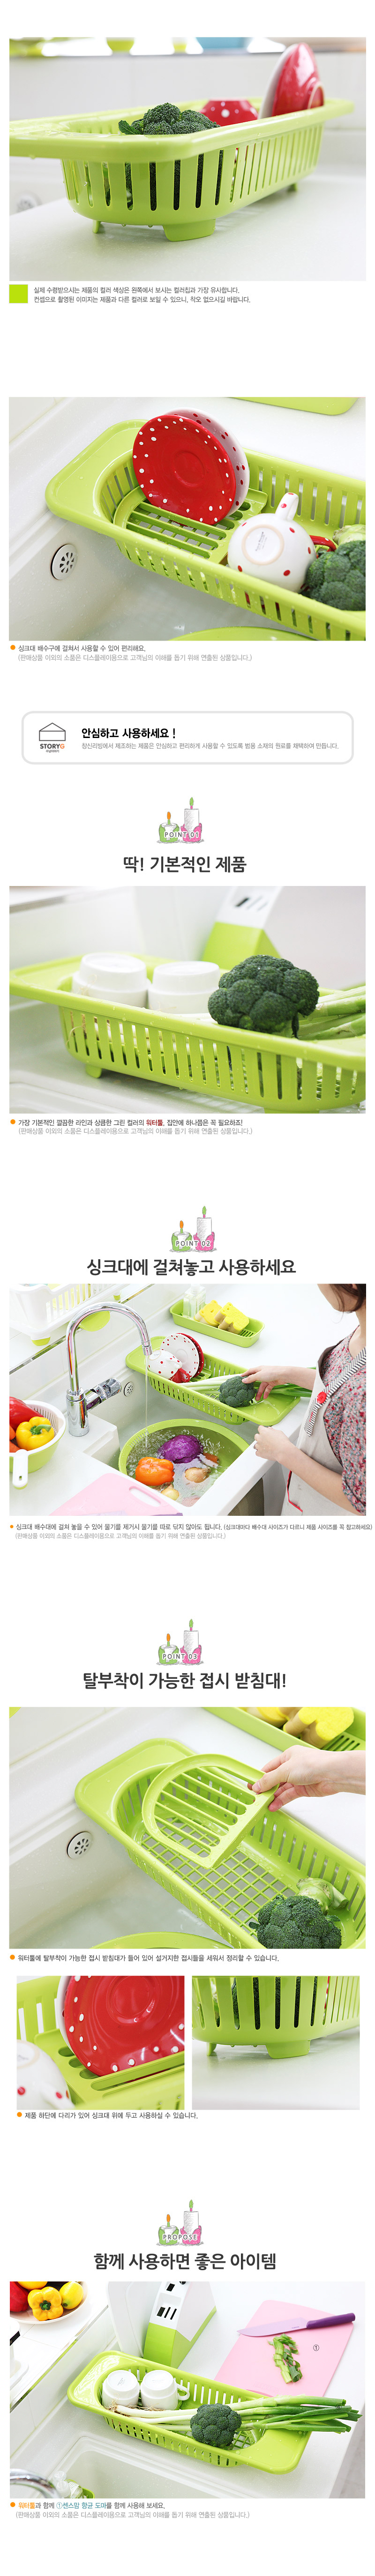 Changsin韩国进口厨房水槽塑料收纳沥水置物蔬果 沥水篮